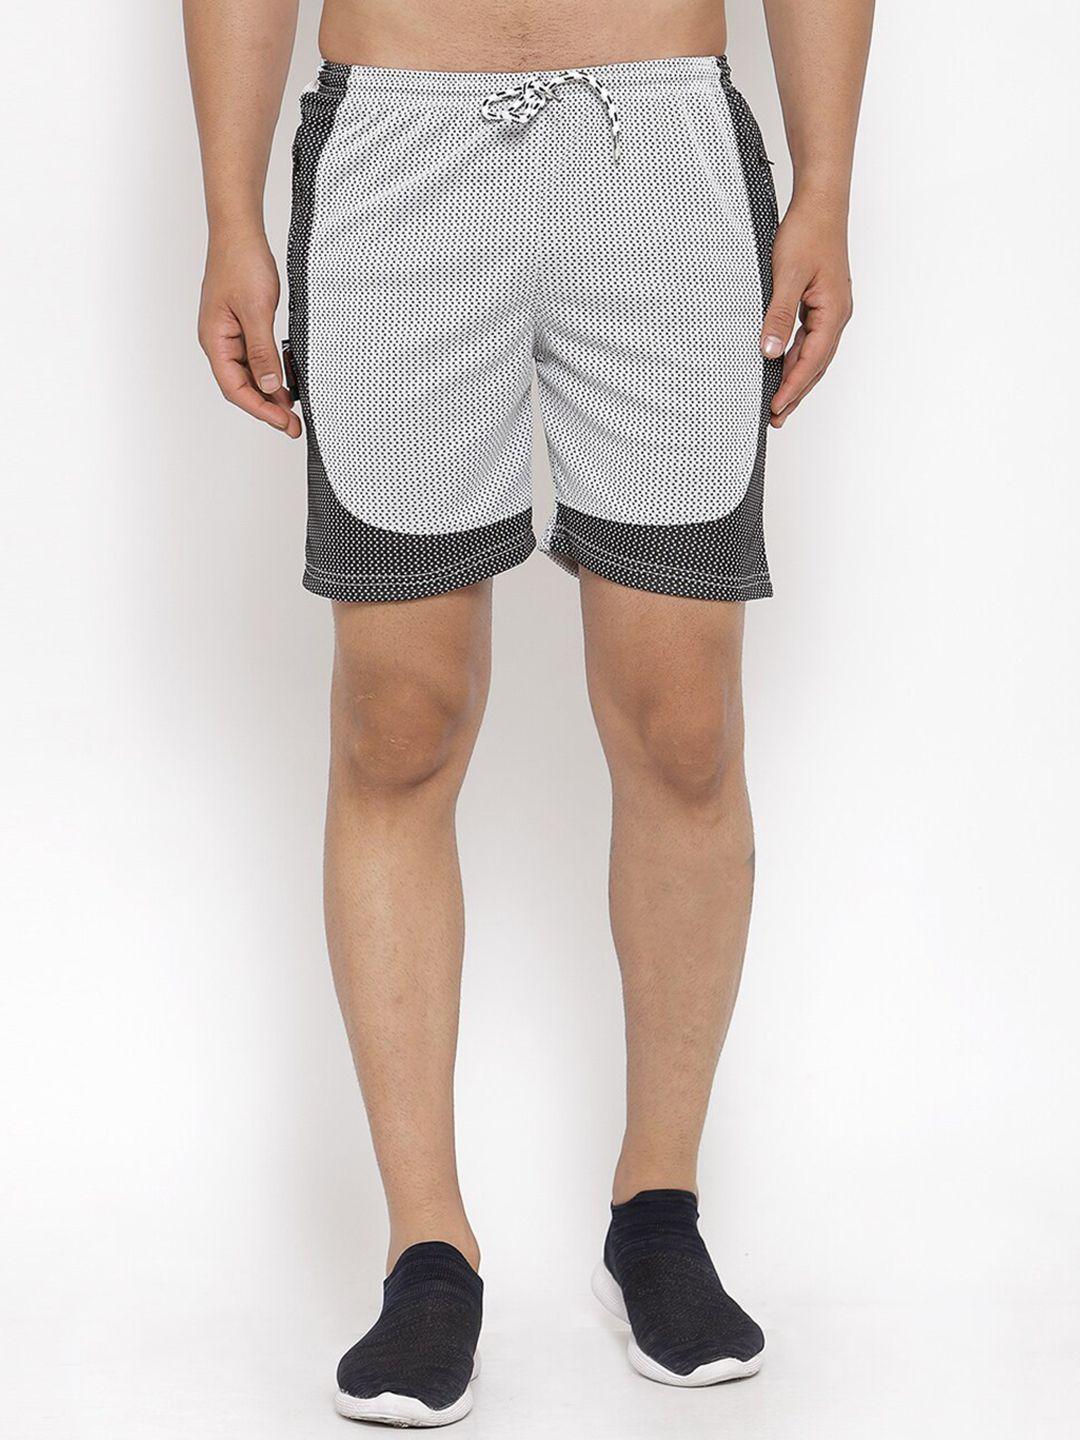 klotthe-men-polka-dots-printed-rapid-dry-sports-shorts